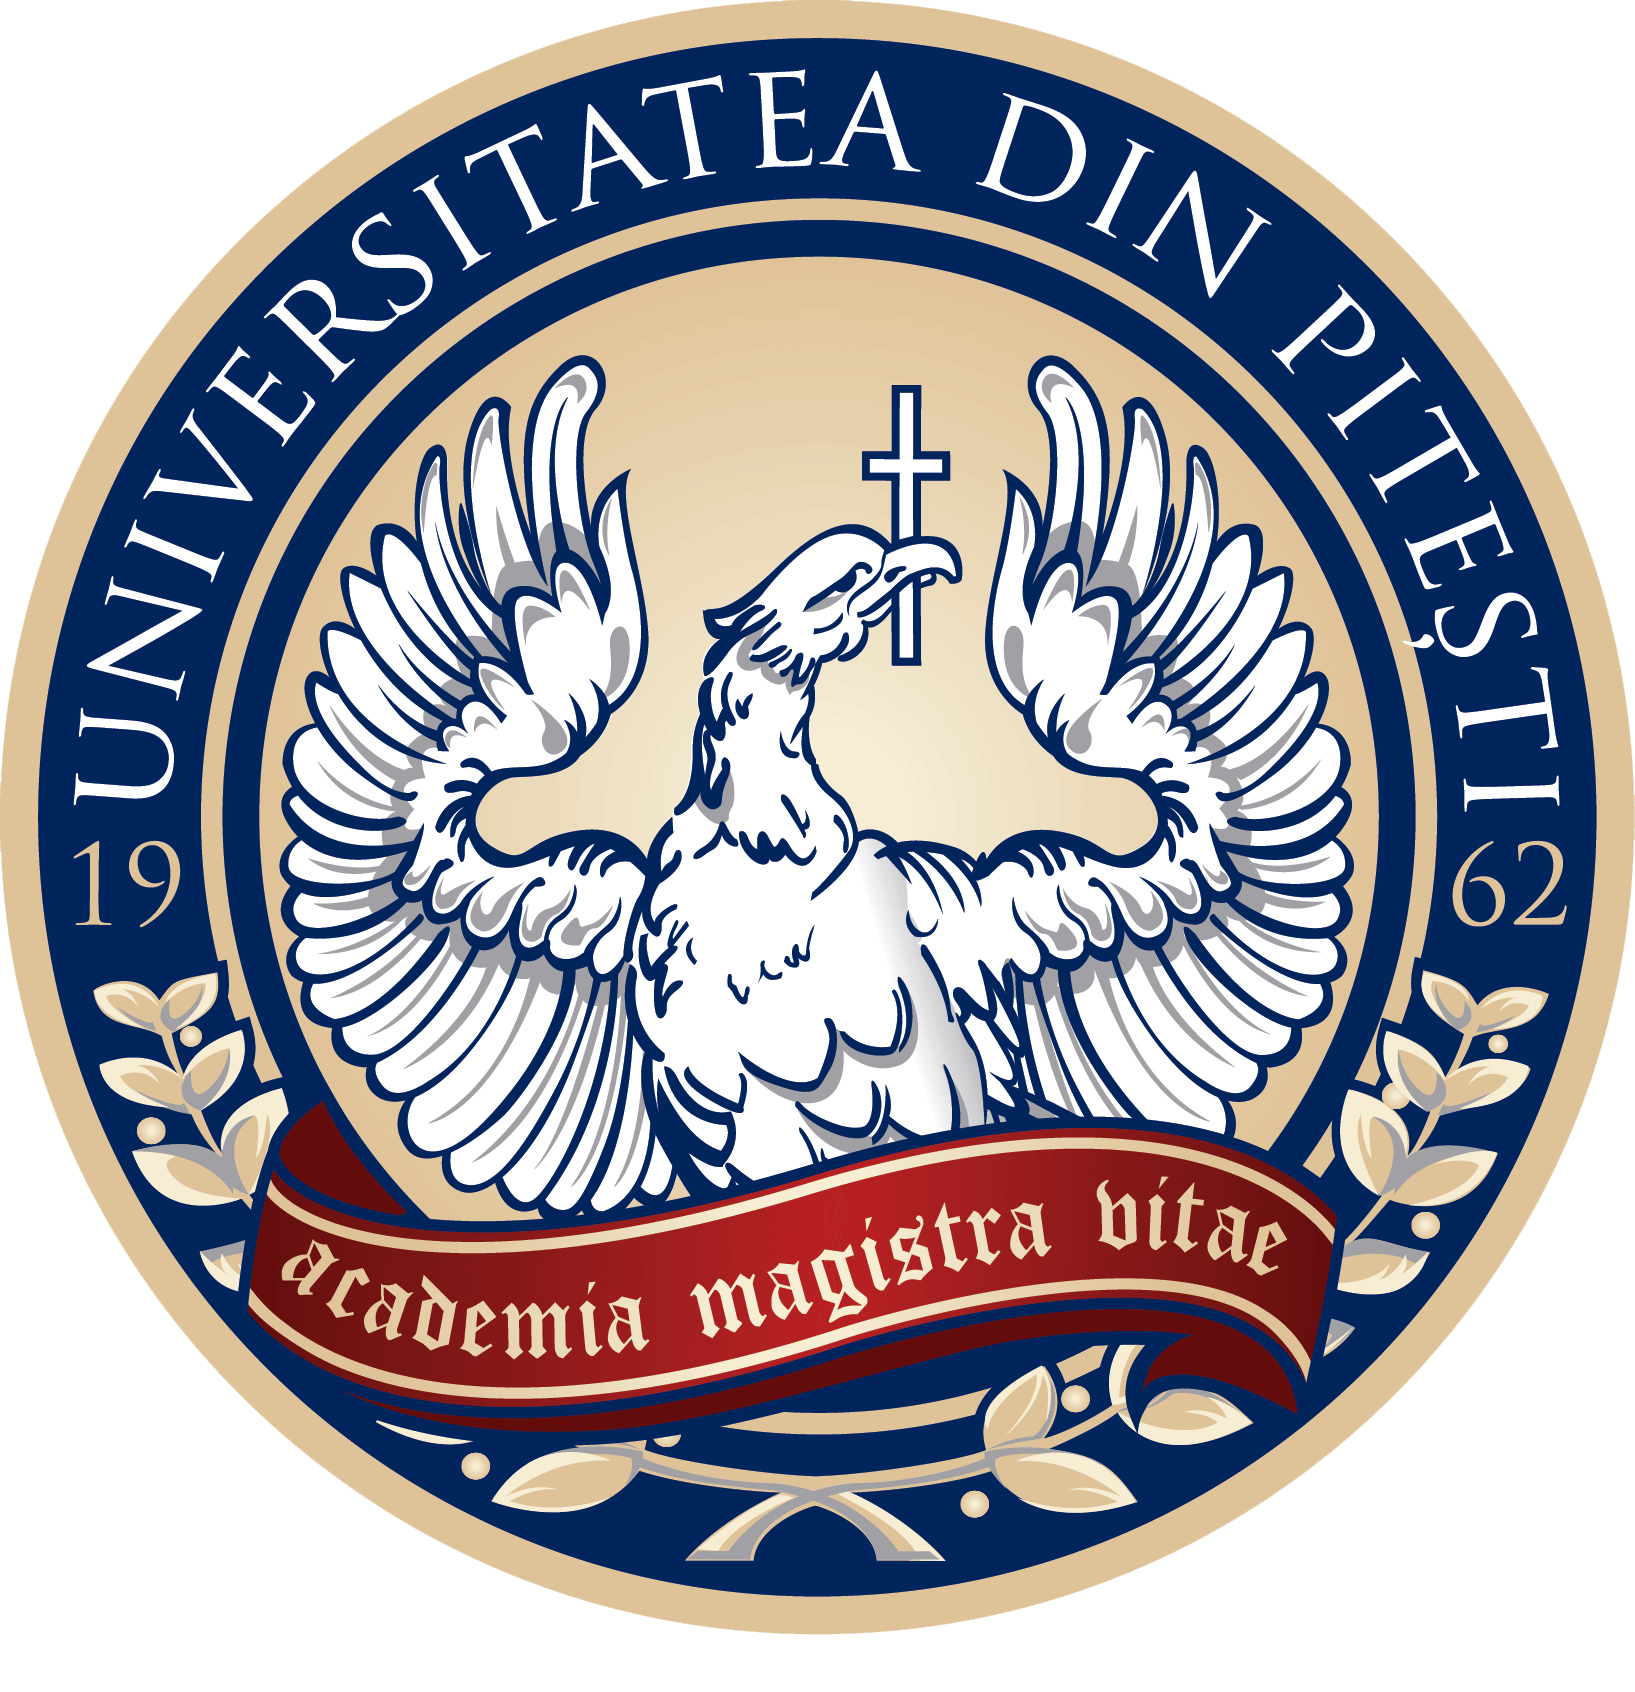 Universitatea din Pitesti logo